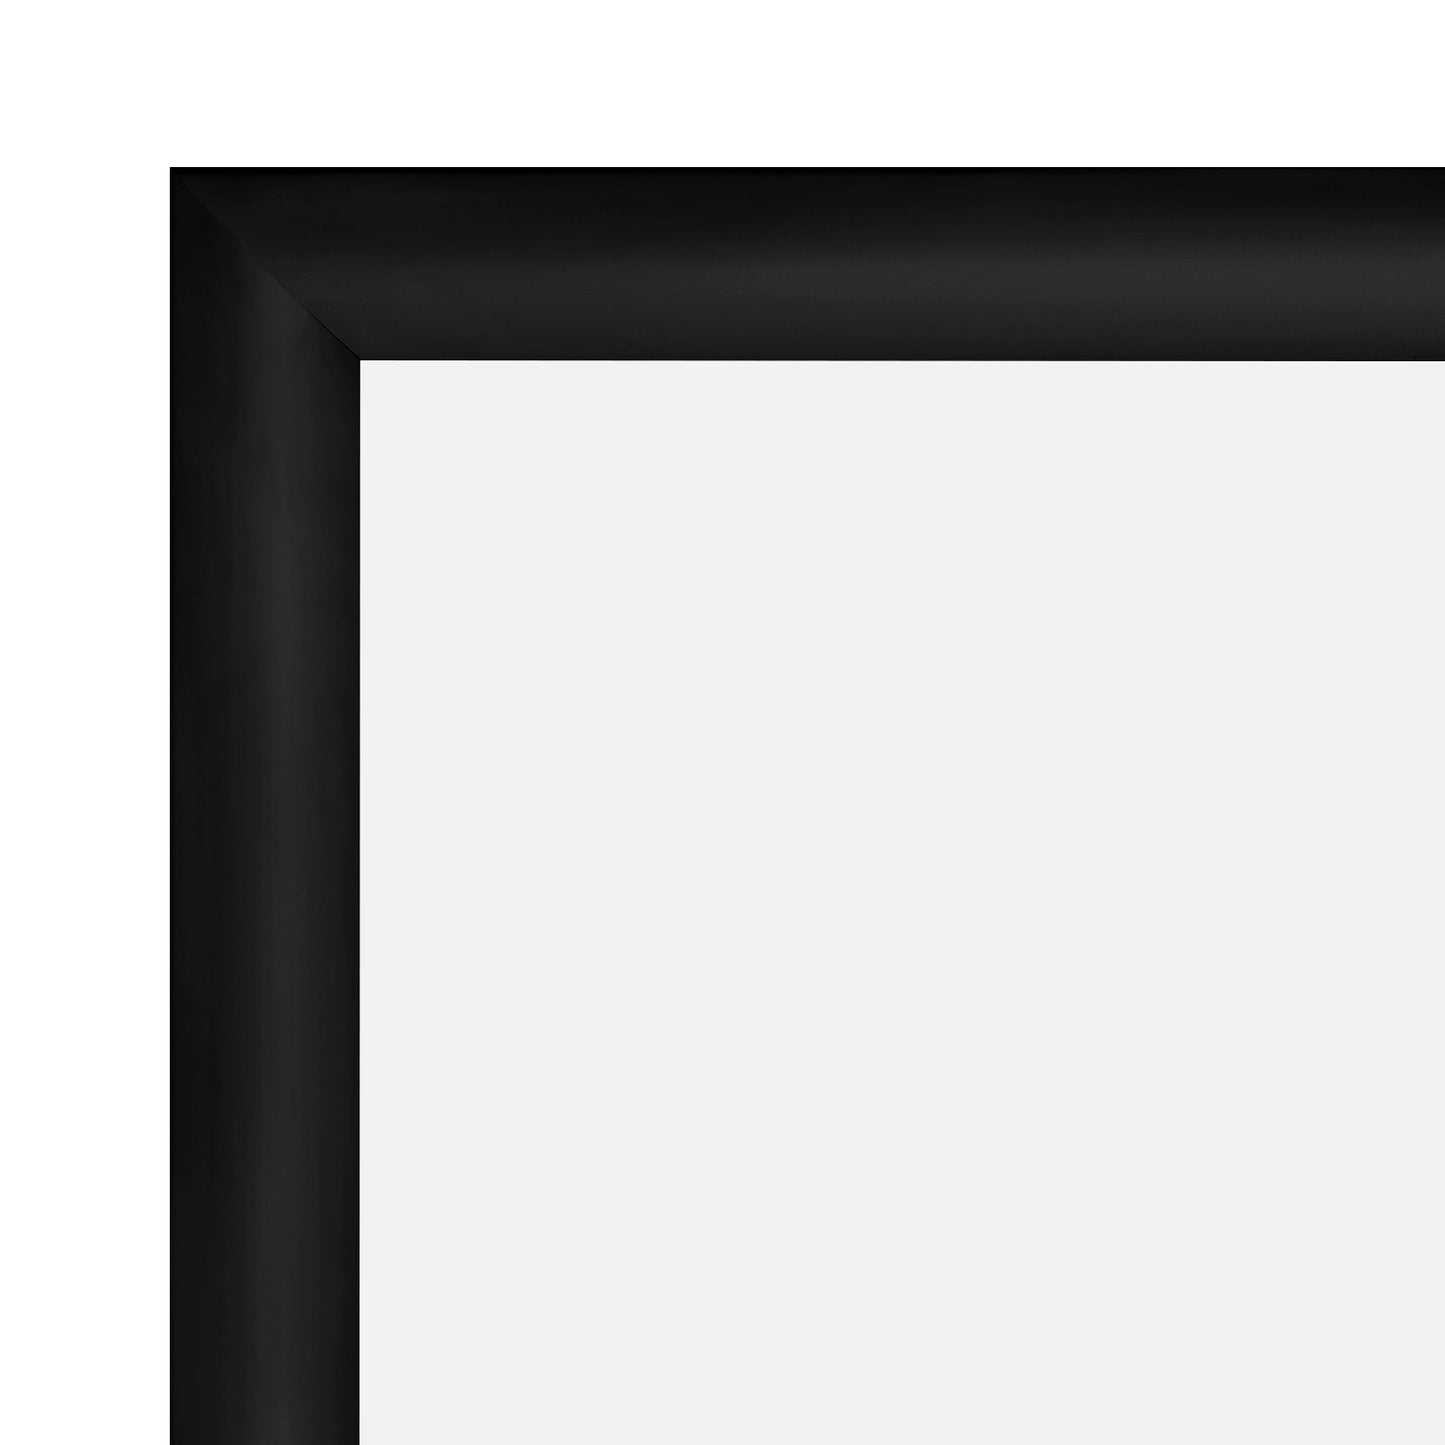 18x22 Black SnapeZo® Snap Frame - 1.2" Profile - Snap Frames Direct